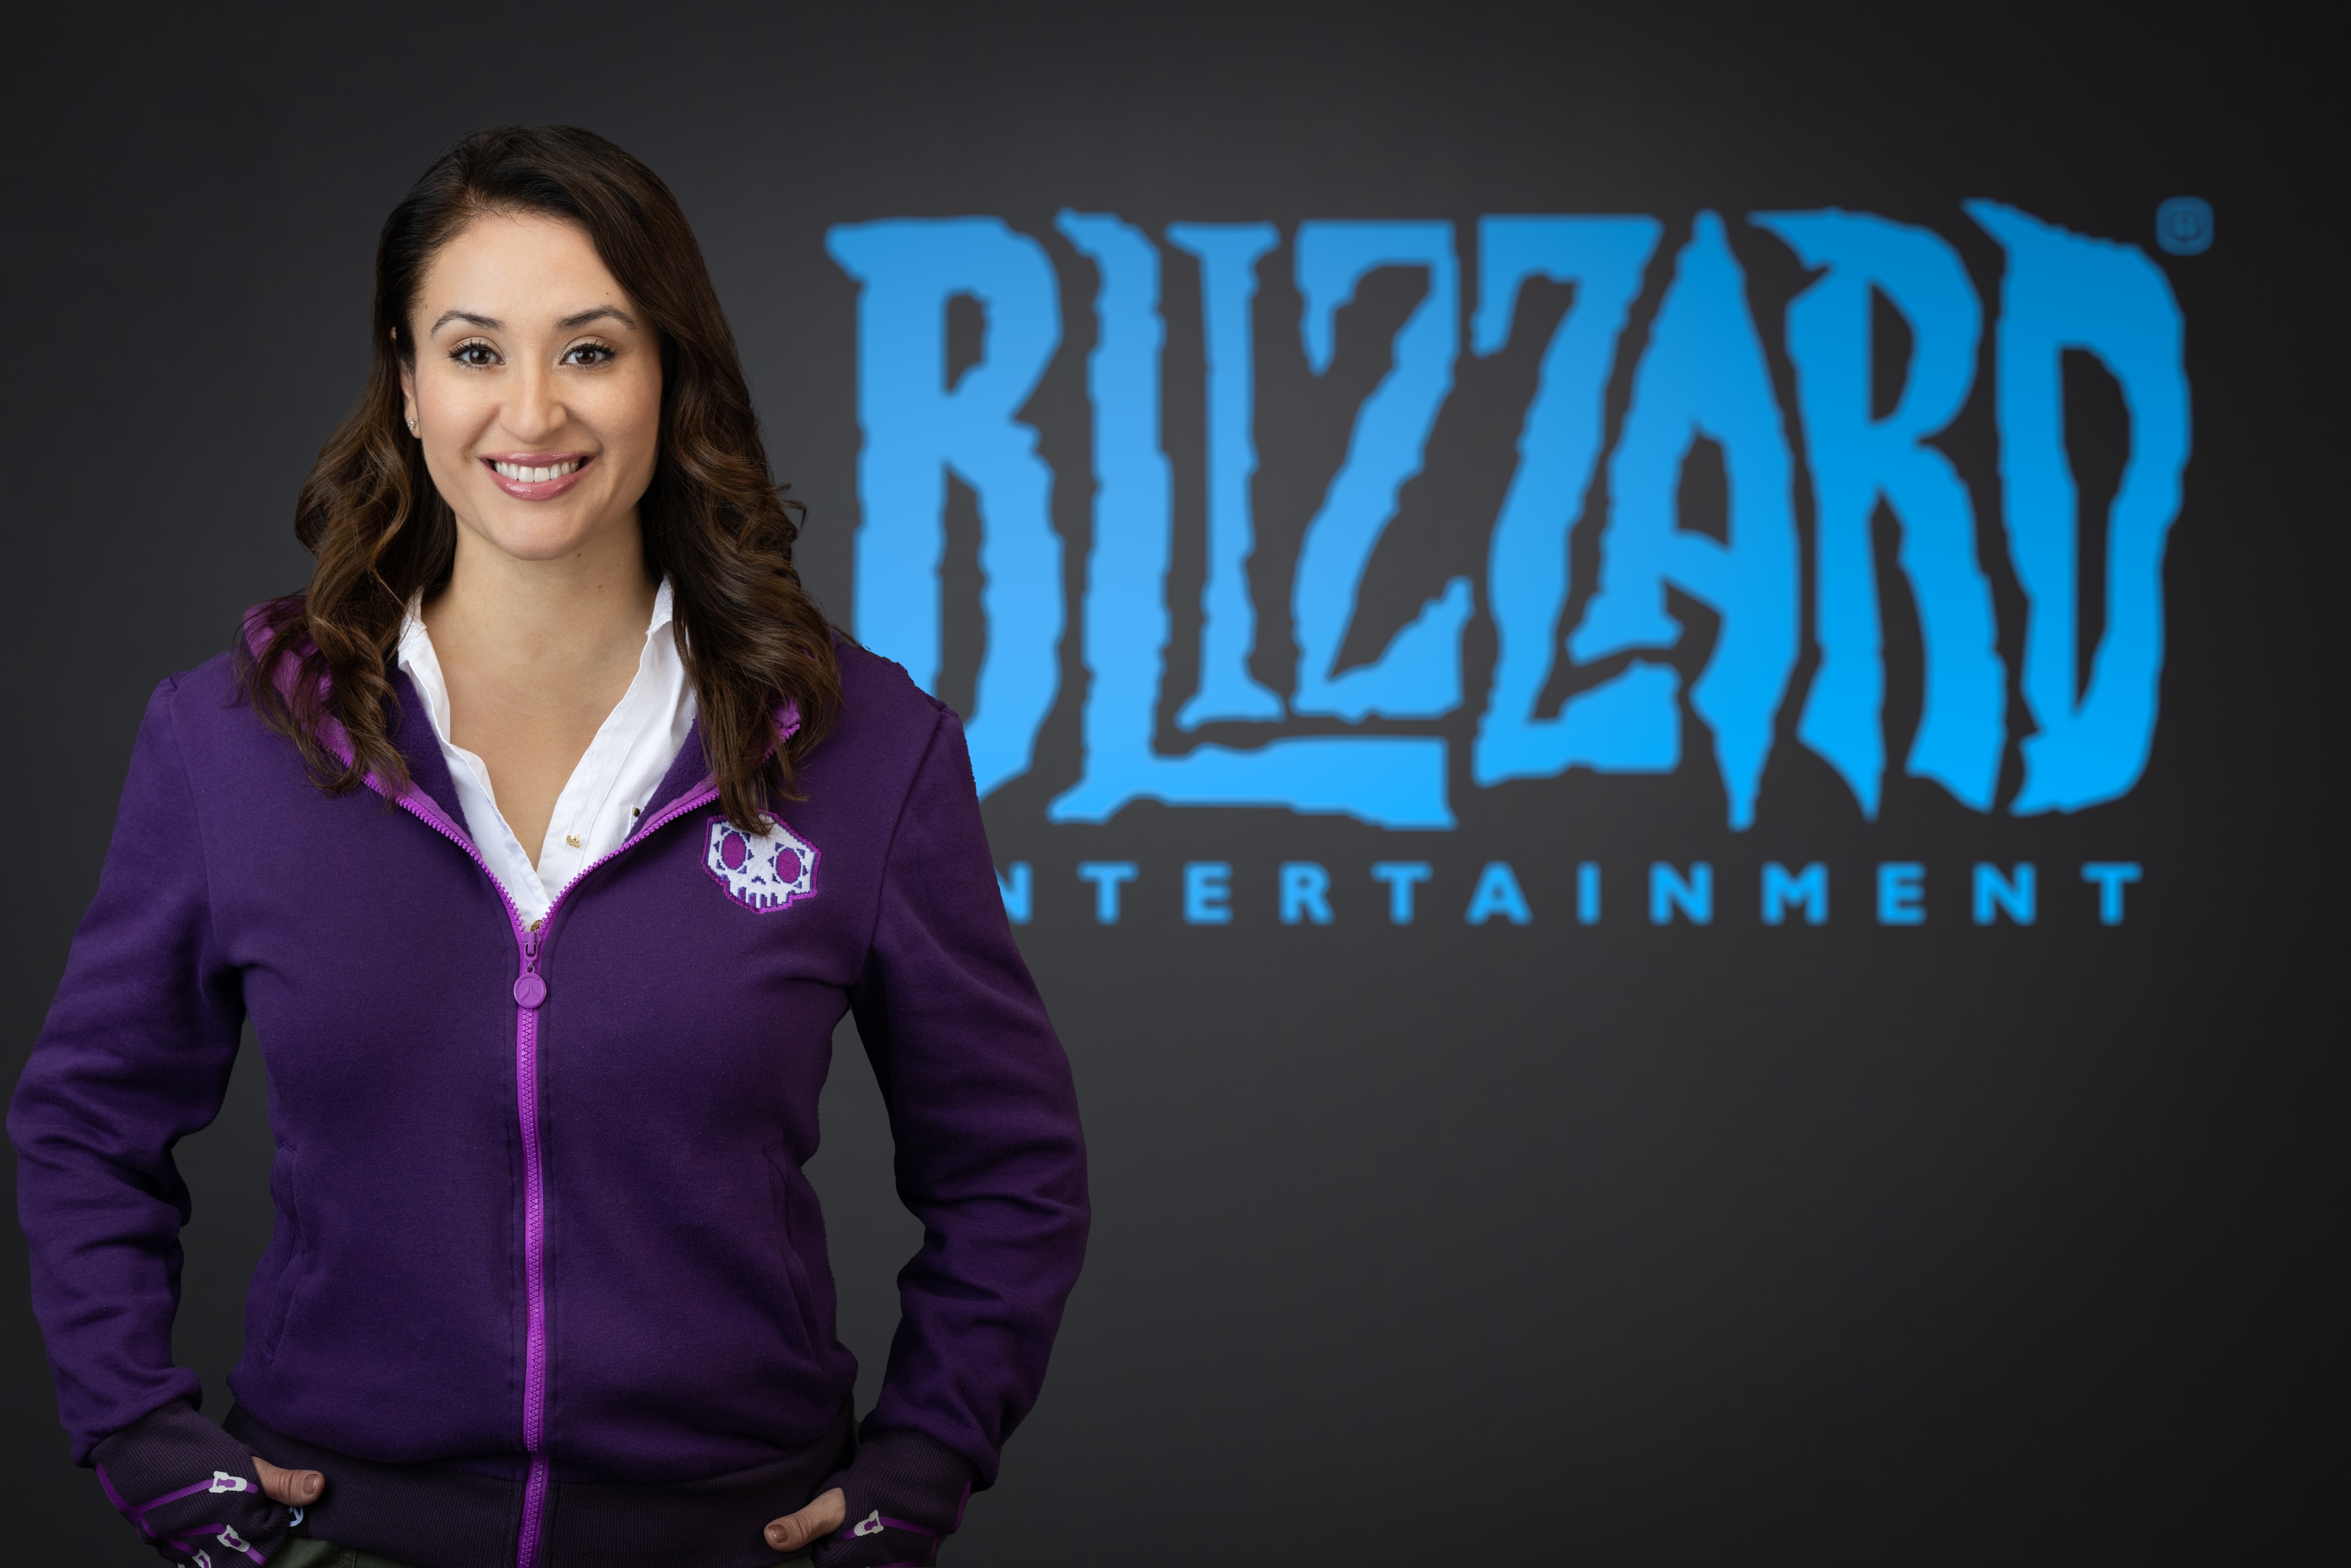 Blizzard Entertainment: Памела Бурга заняла должность директора по инклюзивности 